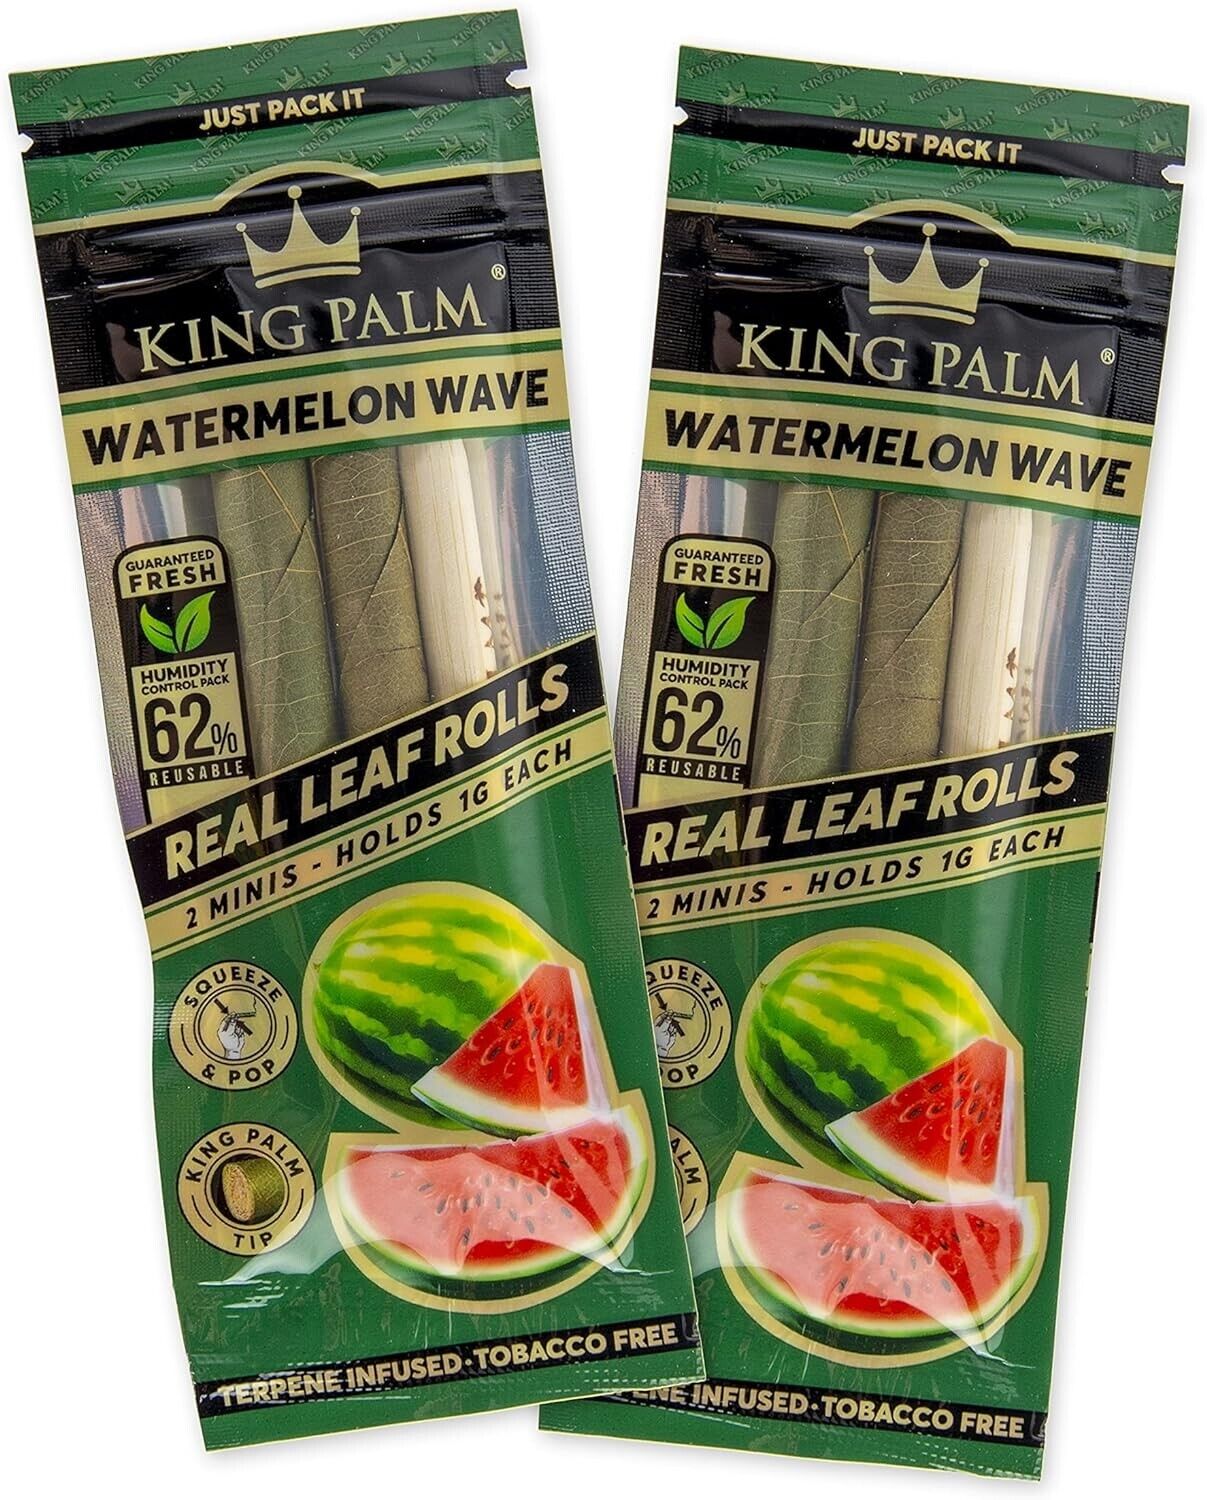 King Palm | Mini | Watermelon wave| Palm Leaf Rolls | 2 Packs of 2 Each =4 Rolls